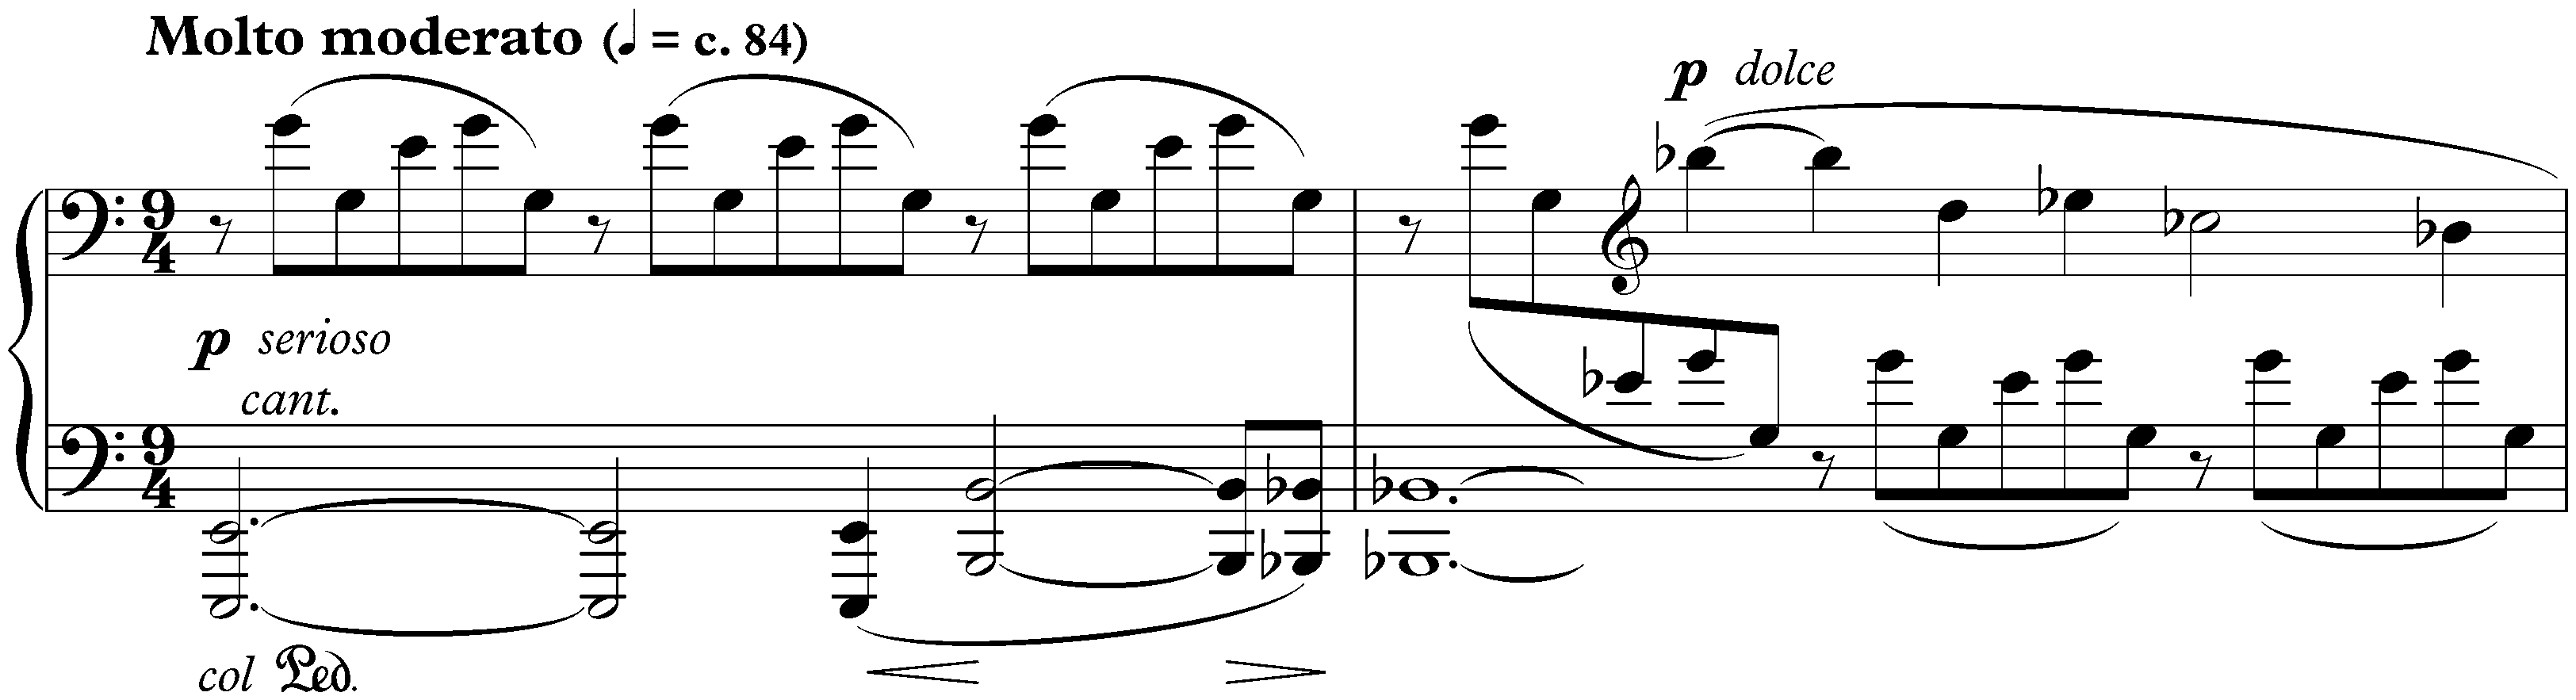 Five Bagatelles, op. 9; 4. Molto moderato